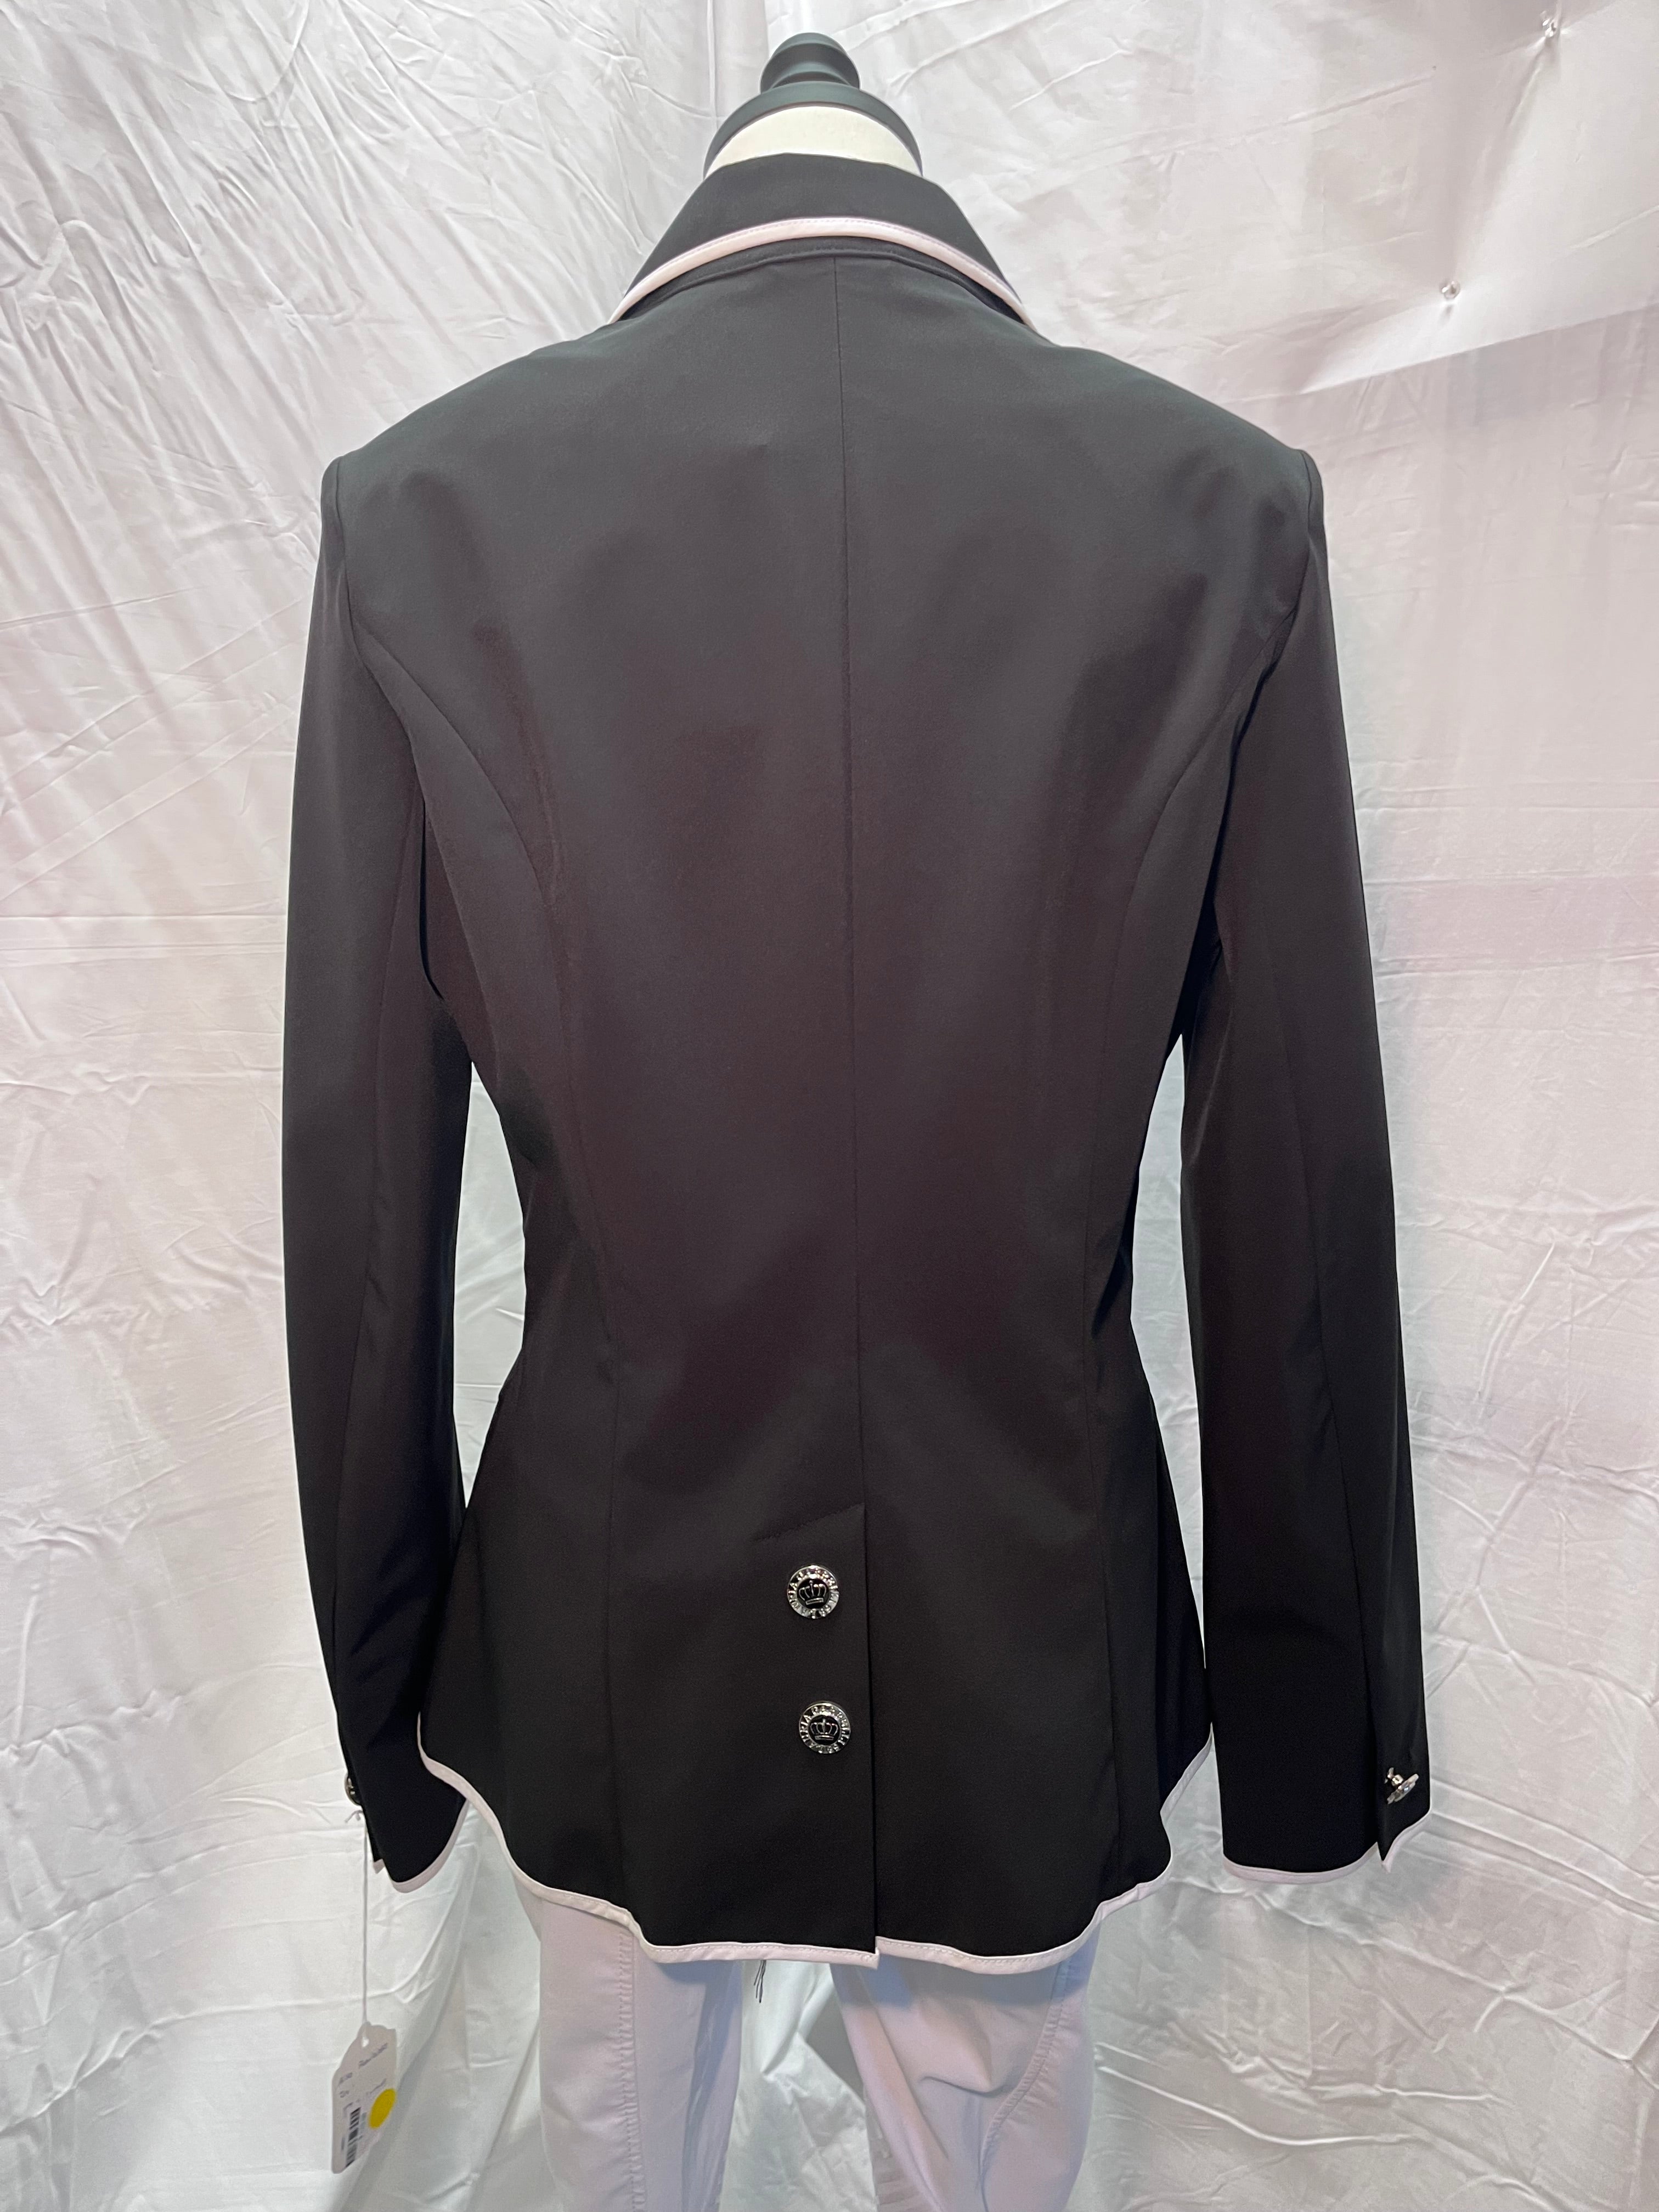 HKM Toskana Softshell Competition Jacket